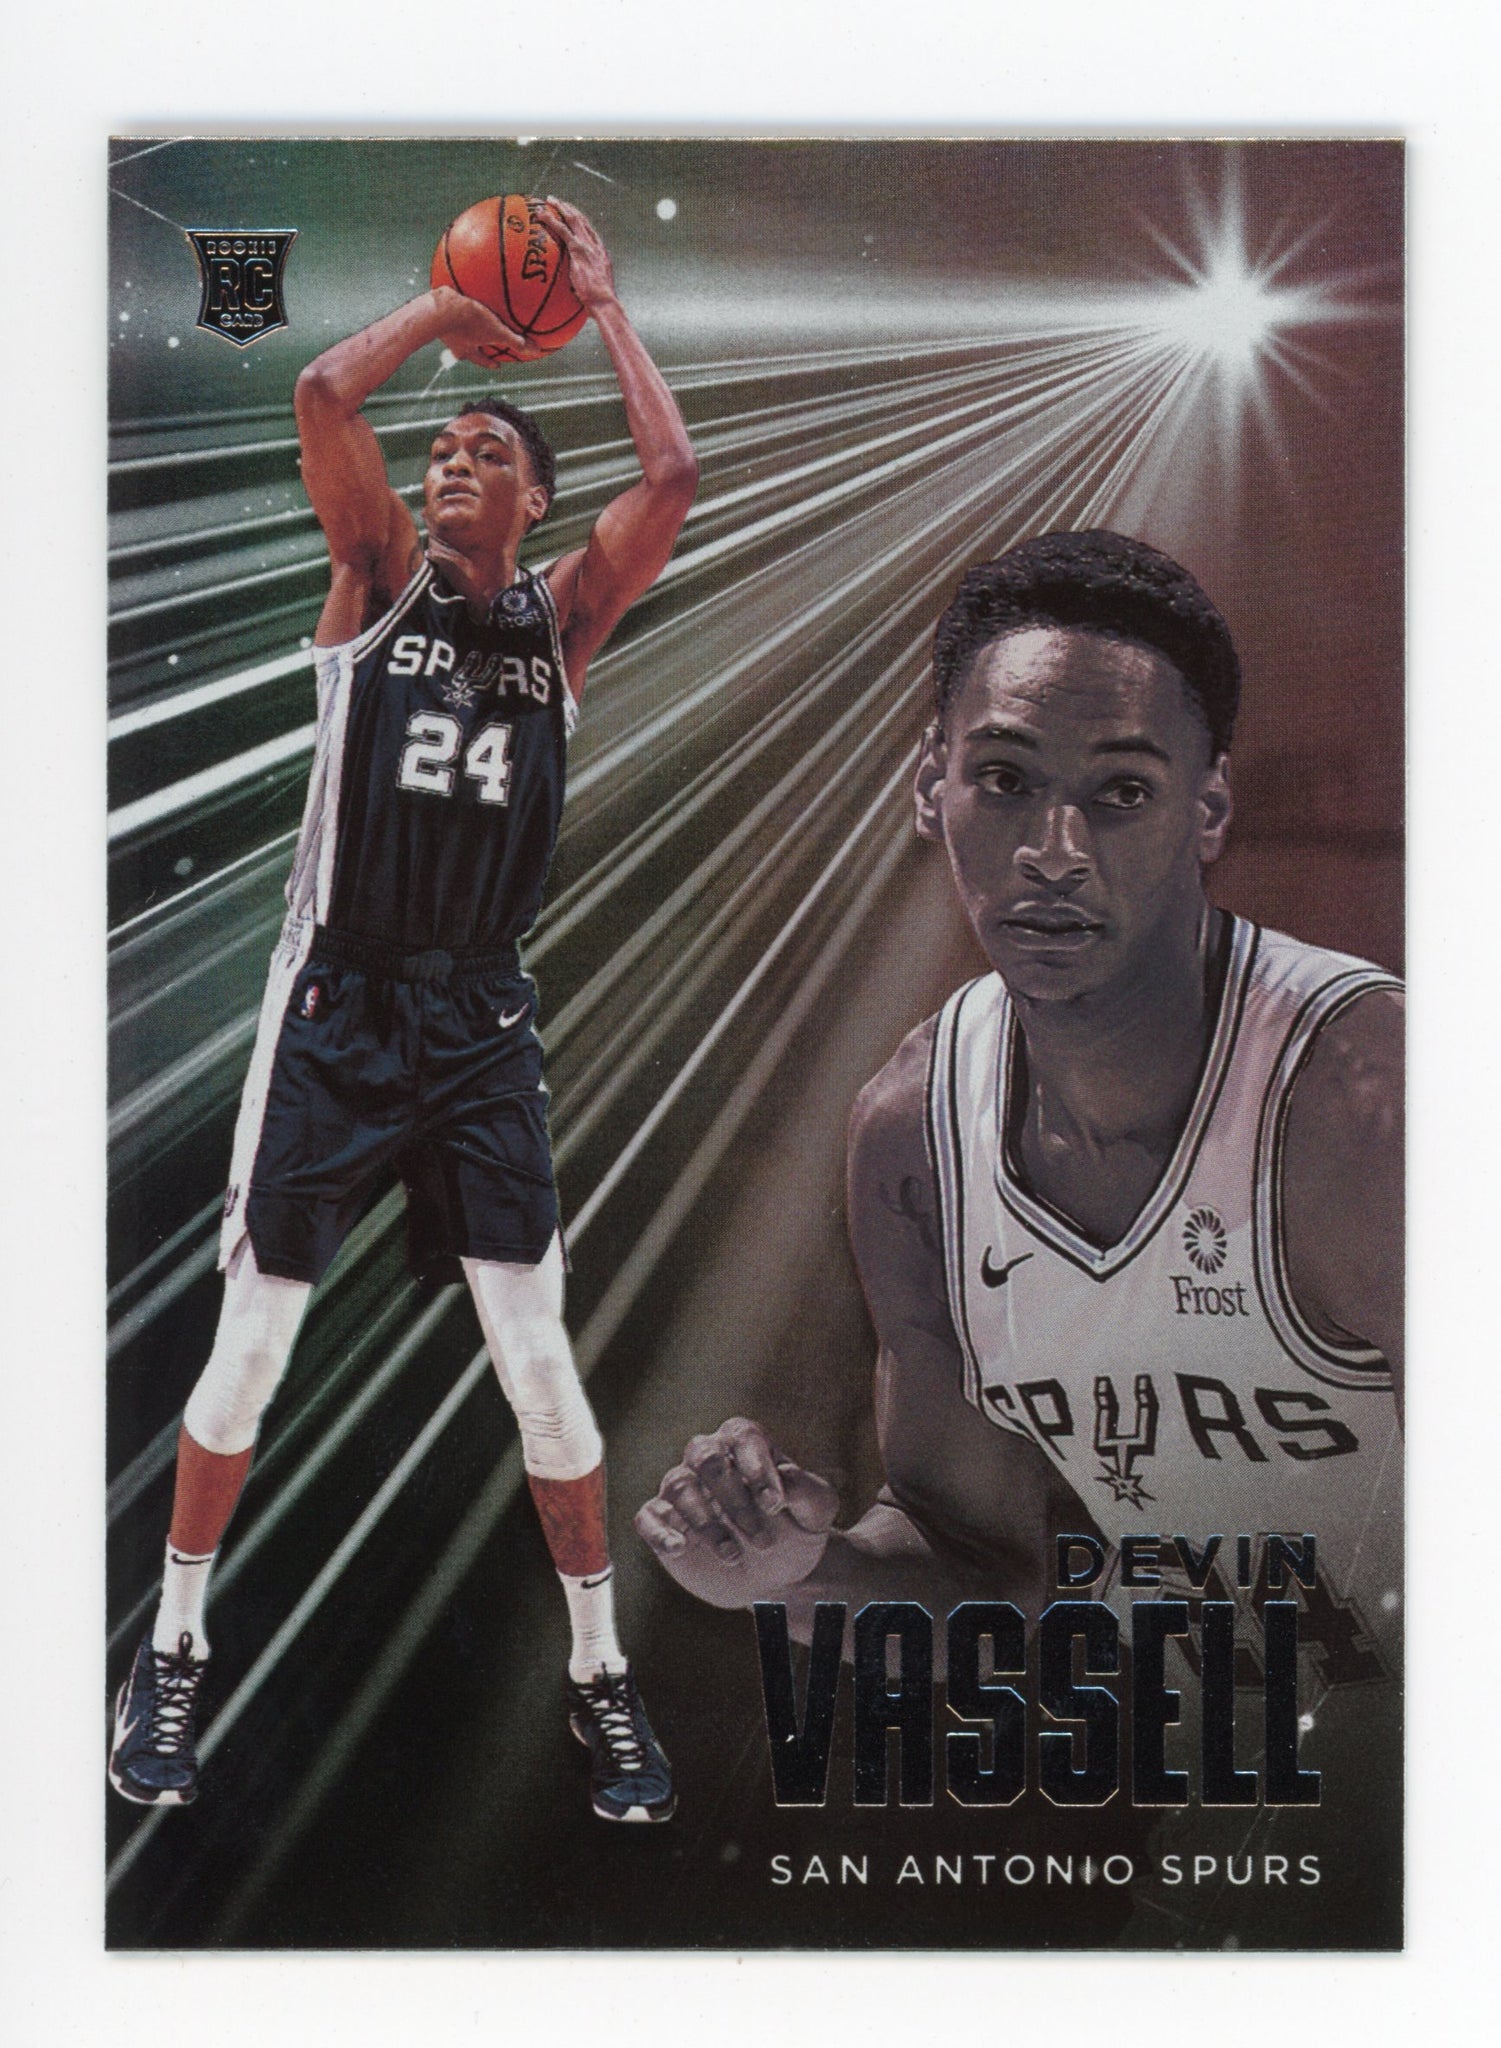 2020-2021 Devin Vassell Rookie Chronicles San Antonio Spurs # 221